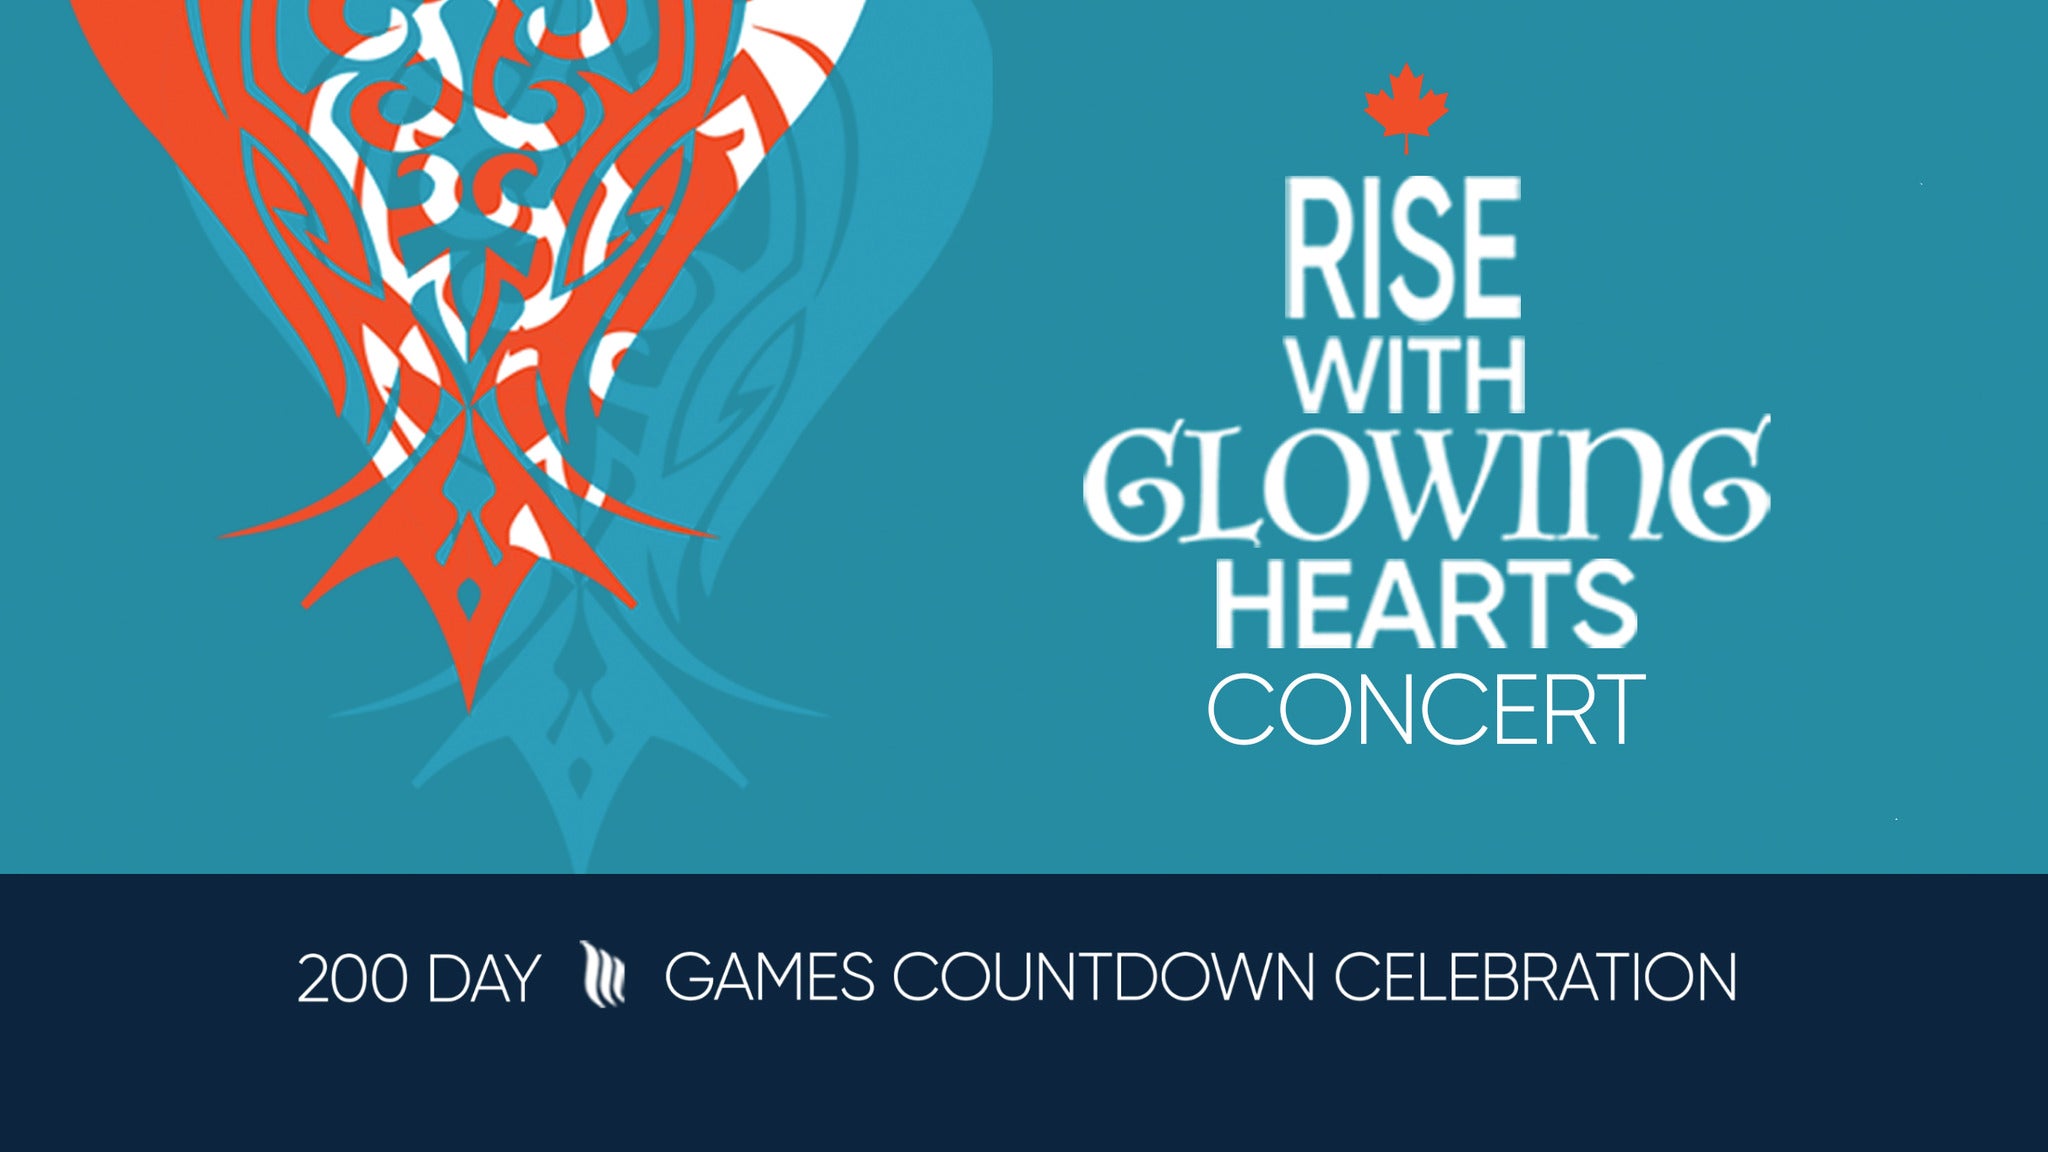 Niagara 2022 Canada Games - 200-Day-Out Countdown Concert presale information on freepresalepasswords.com